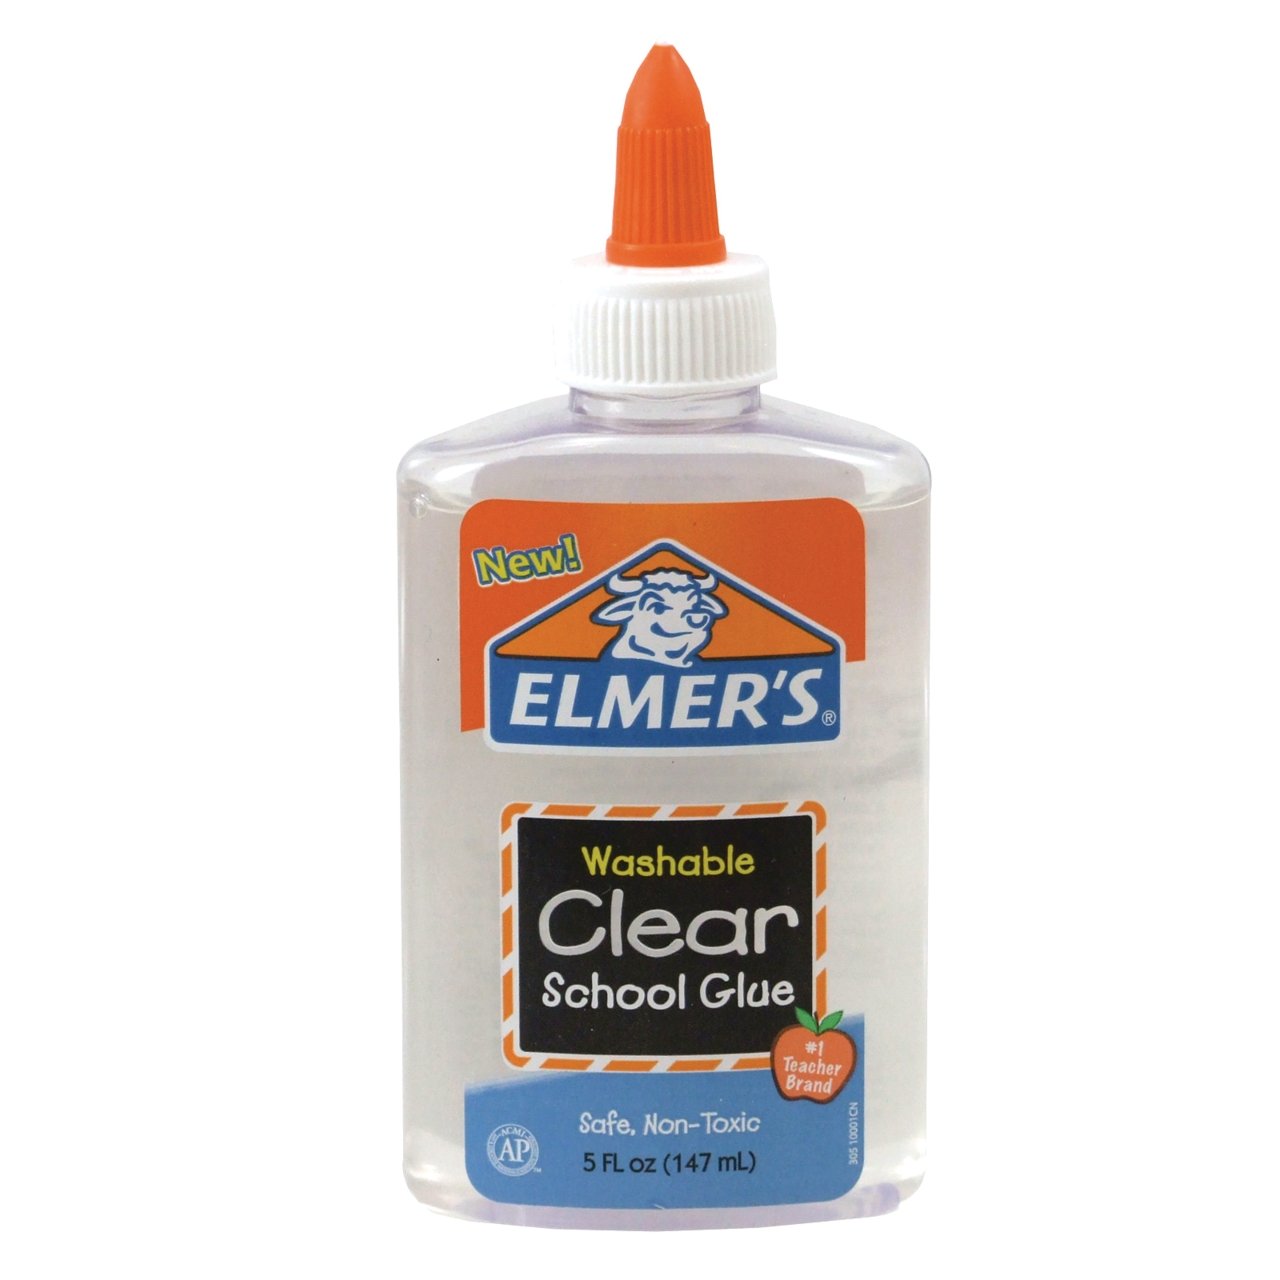 Elmers Washable Clear School Glue 5 fl. oz. - merriartist.com